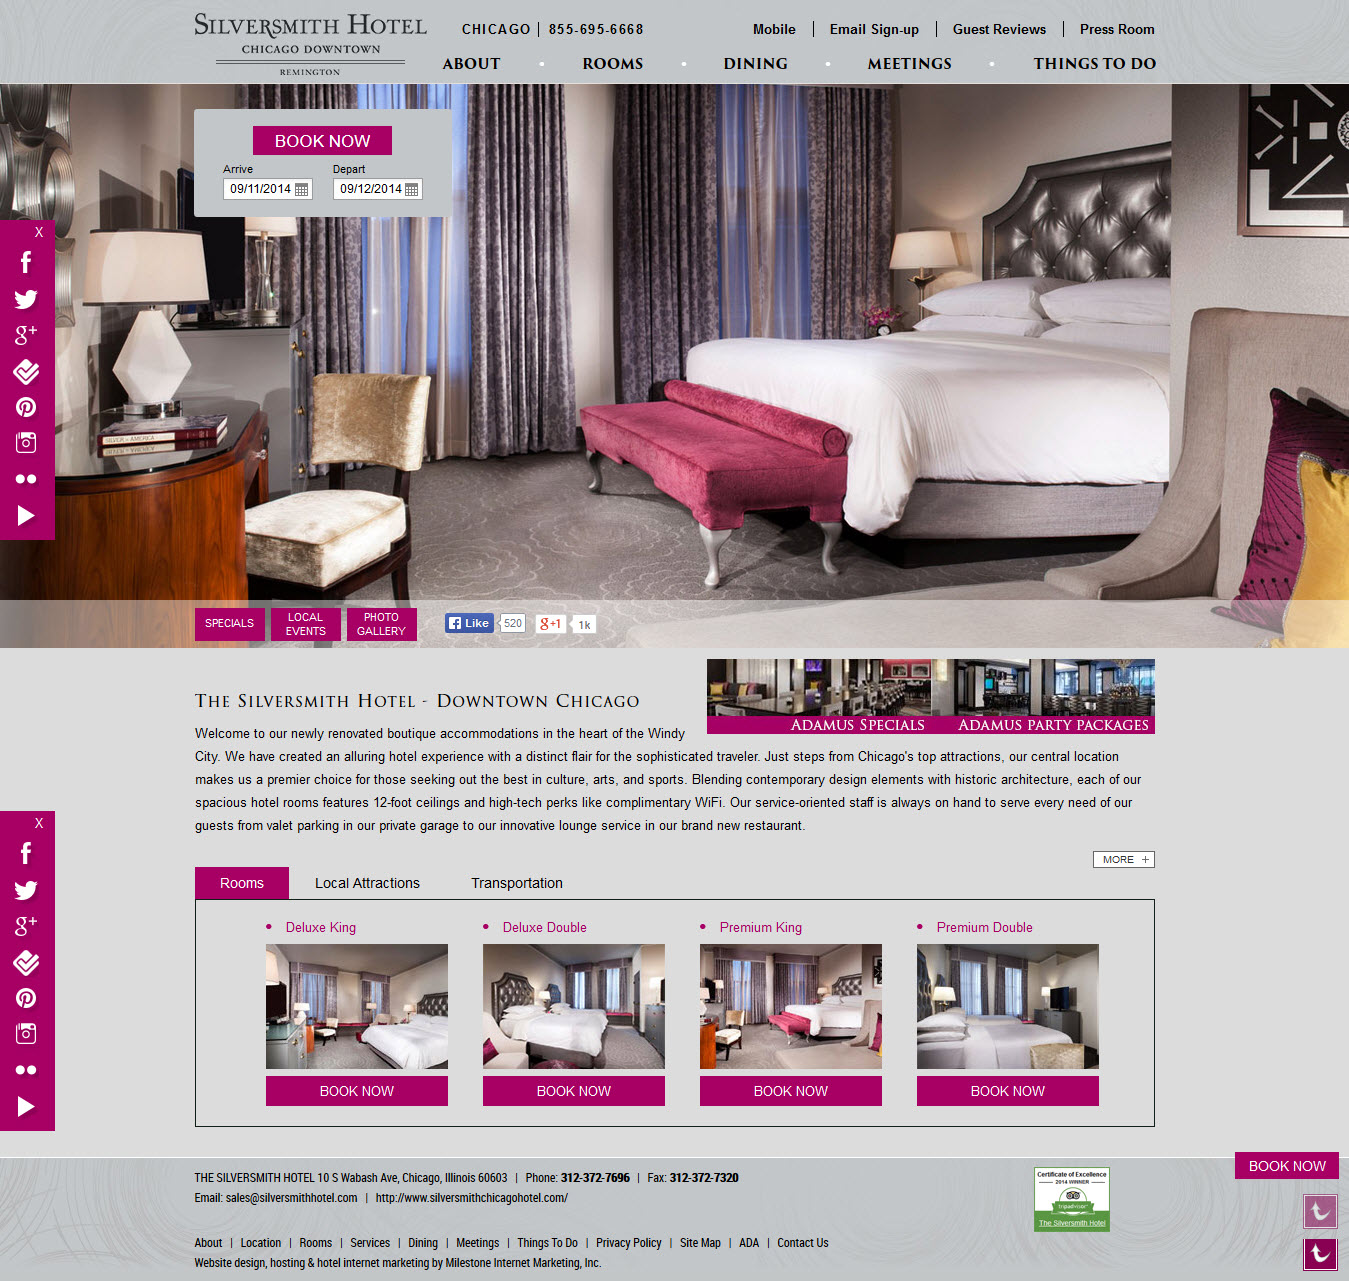 Silversmith Hotel Website Design & Digital Marketing image